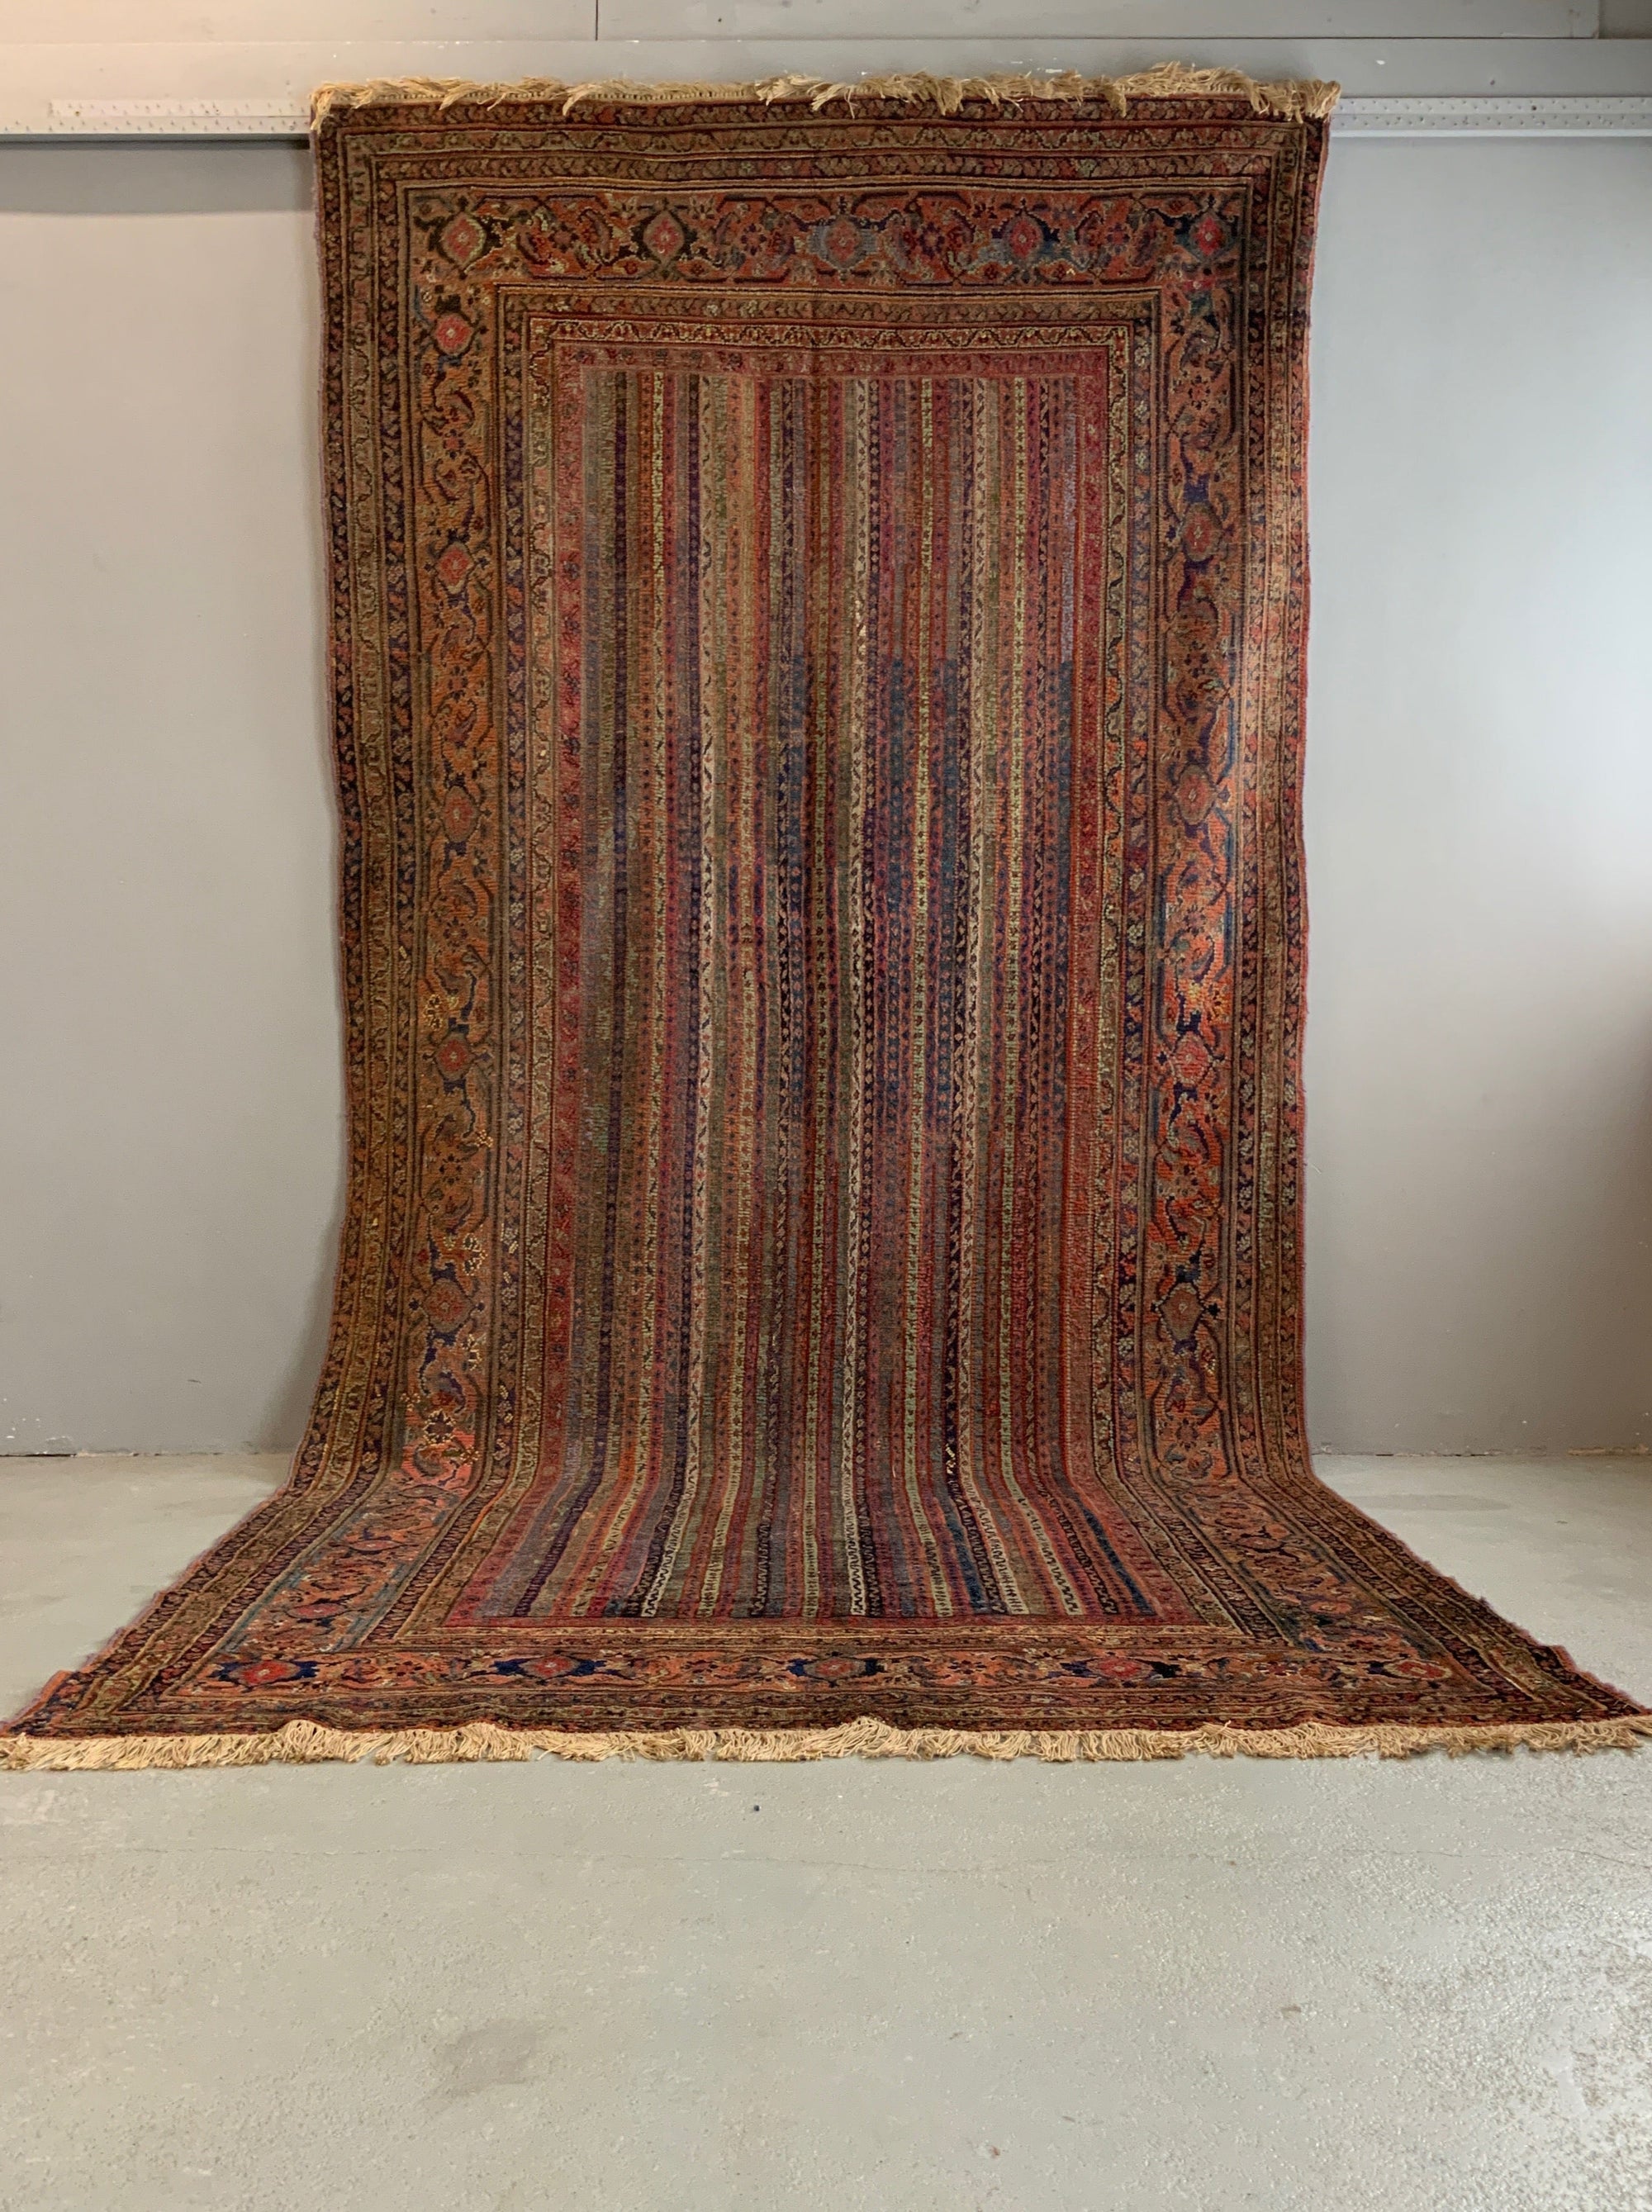 Dorokhsh kelleigh antique carpet (371 x 179cm)